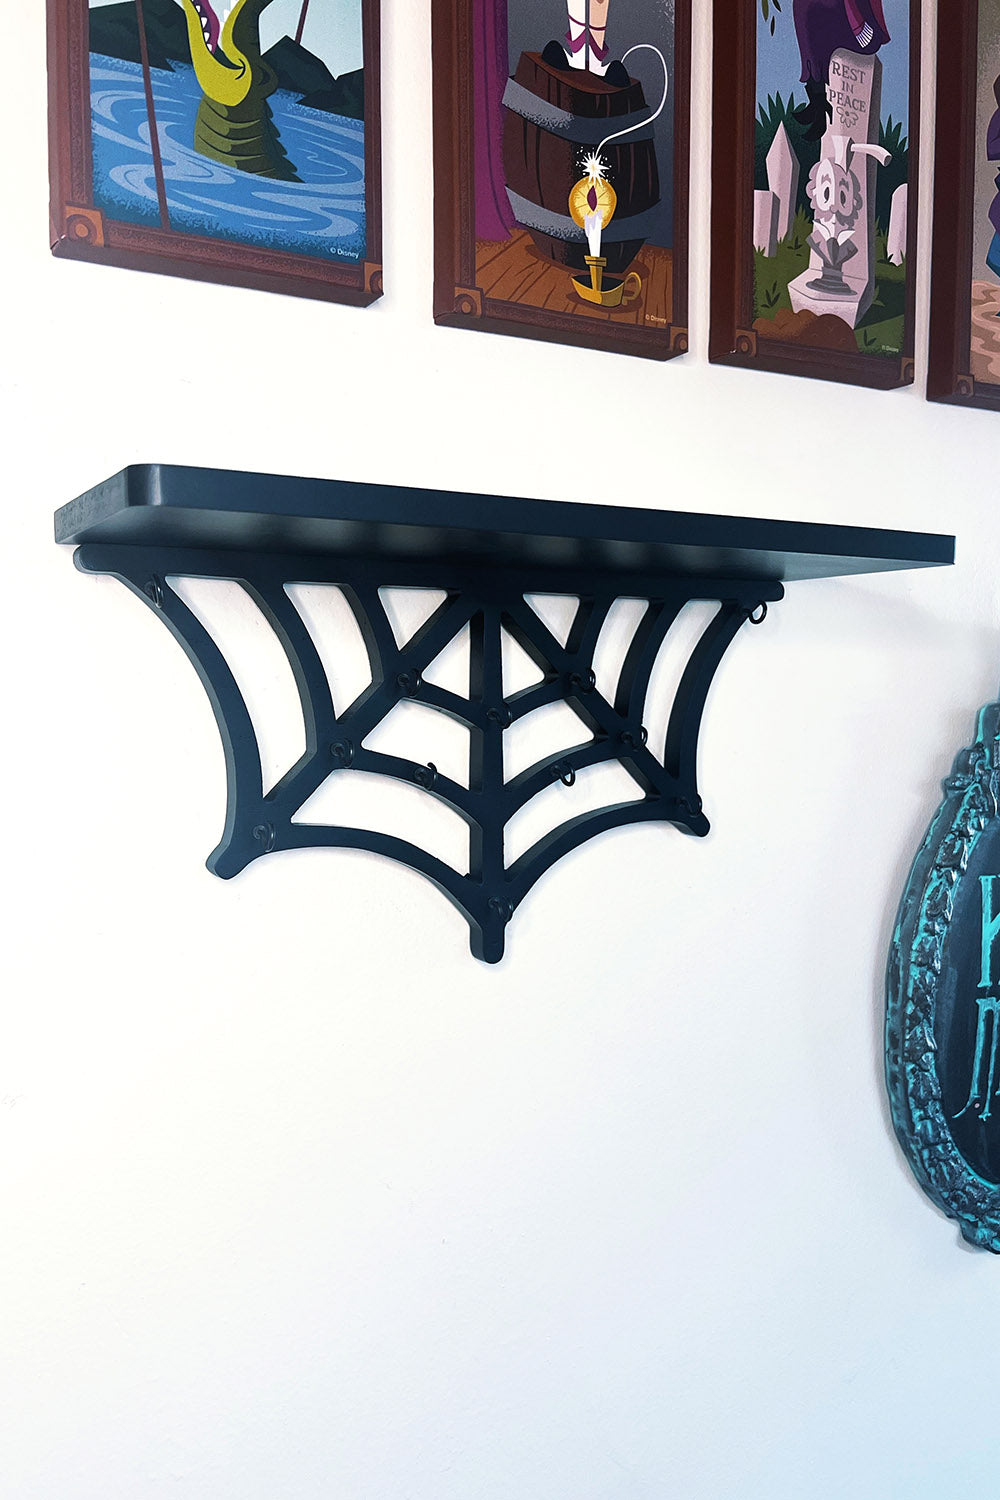 hang-up gothic shelf